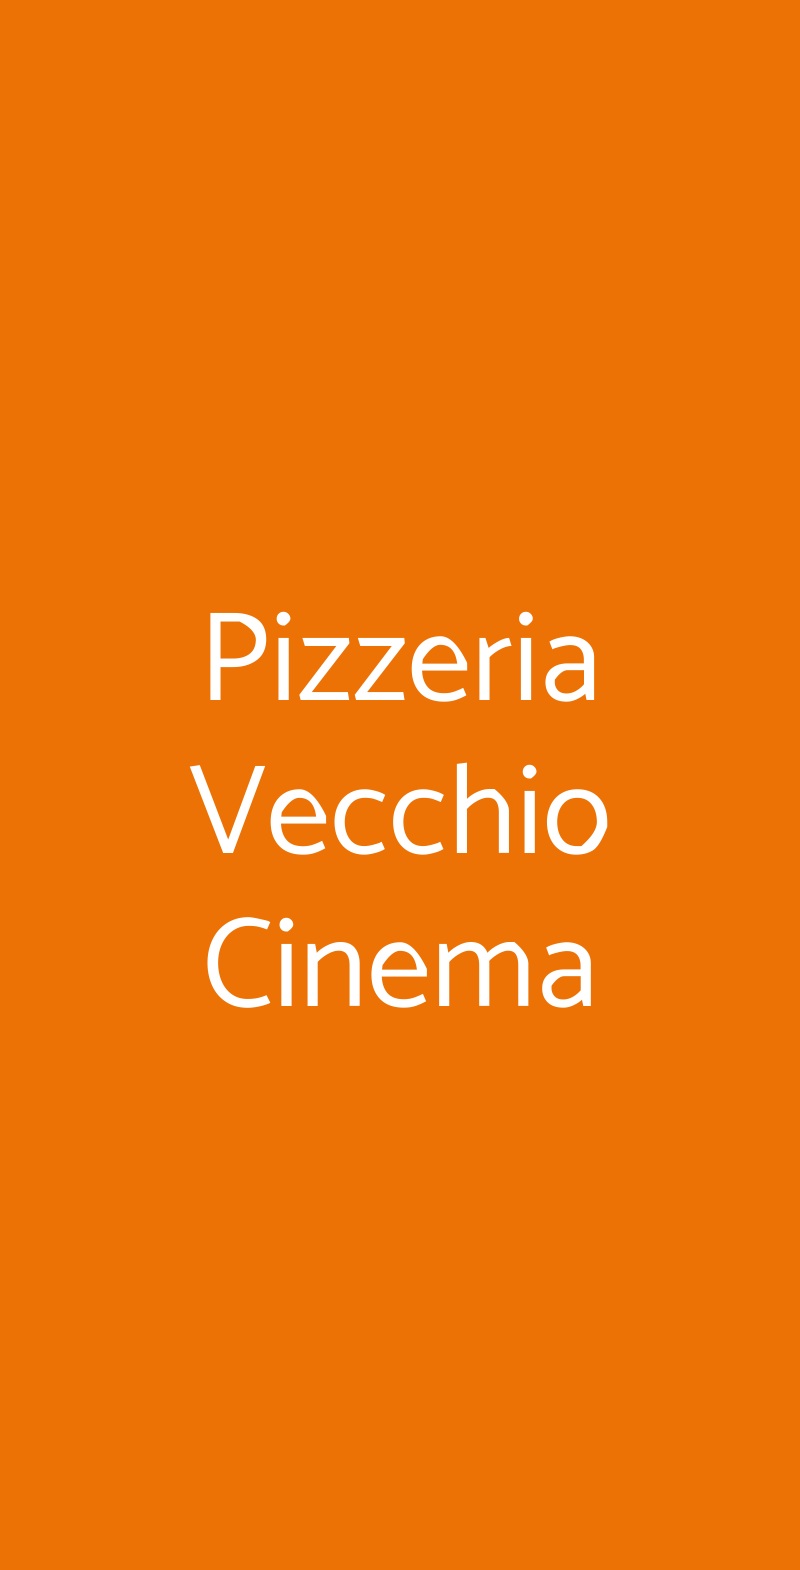 Pizzeria Vecchio Cinema San Miniato menù 1 pagina